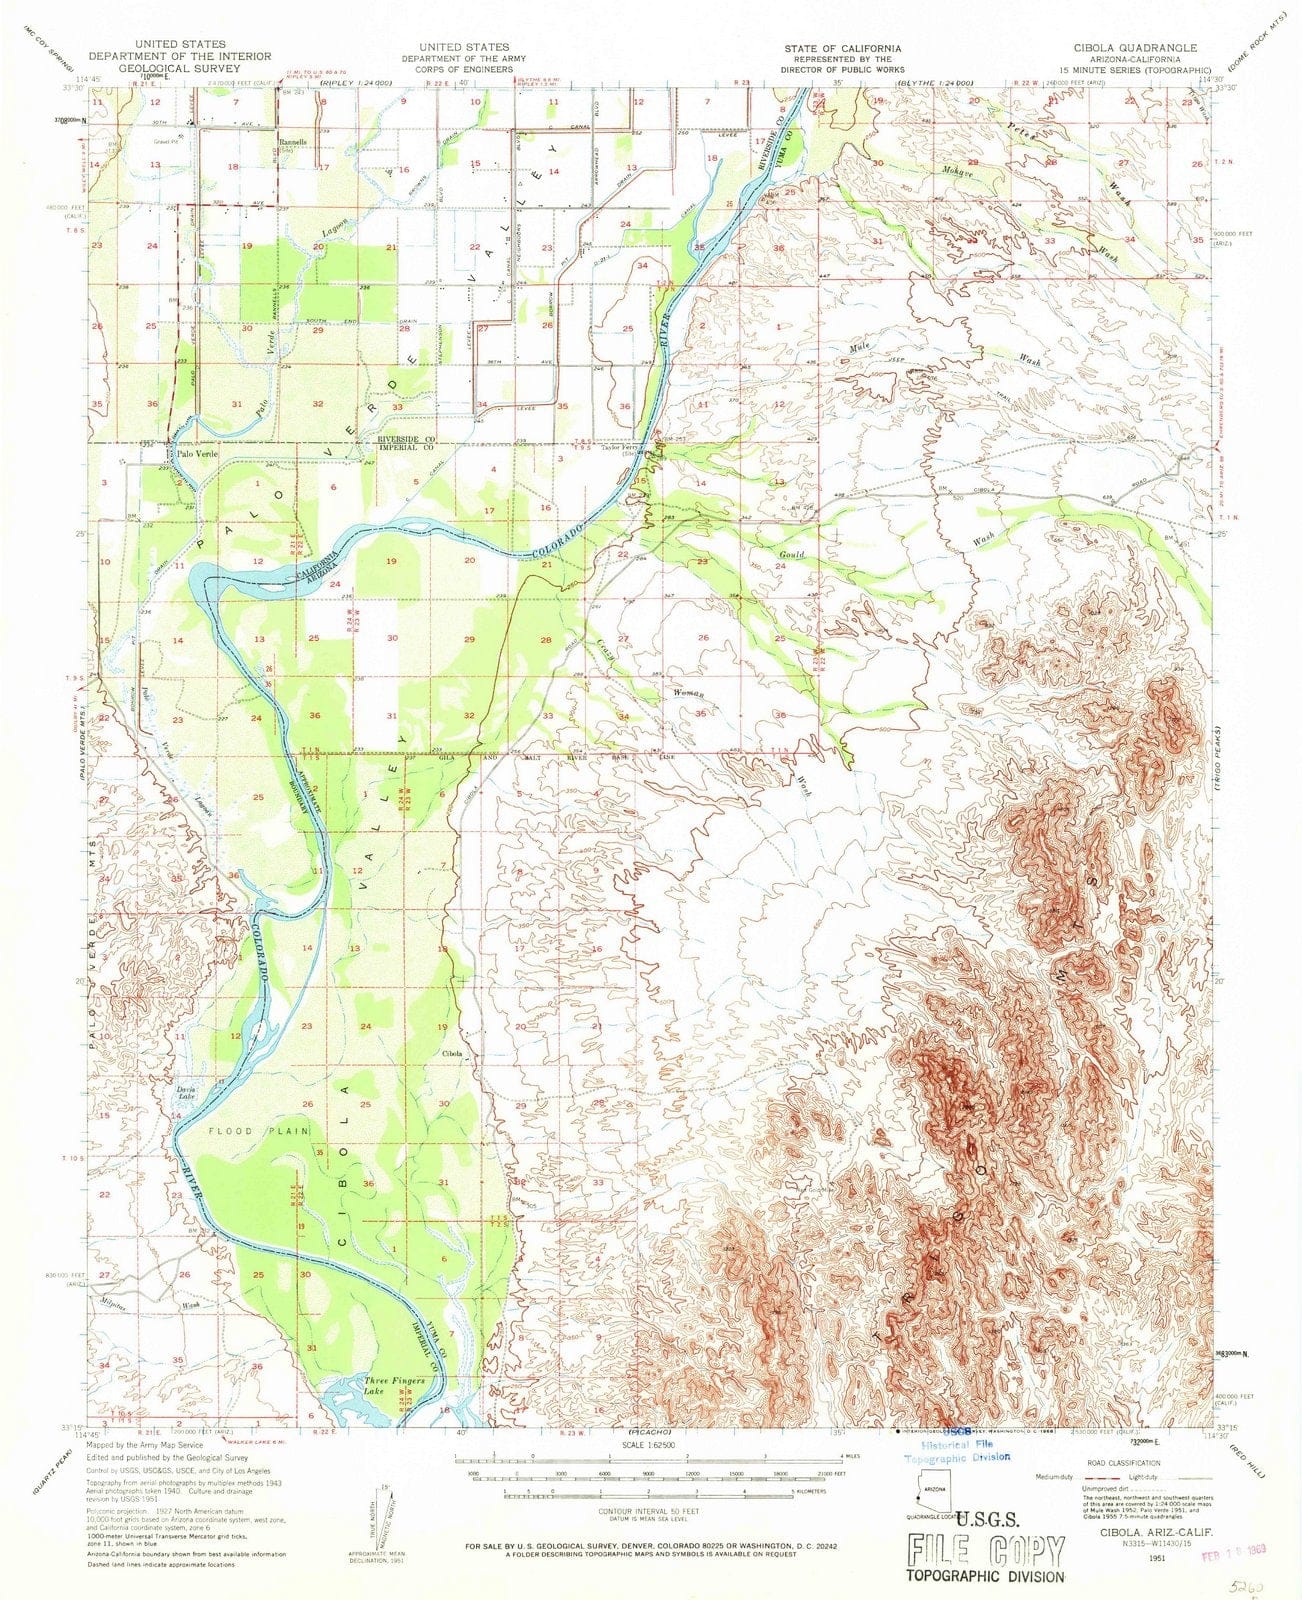 1951 Cibola, AZ - Arizona - USGS Topographic Map